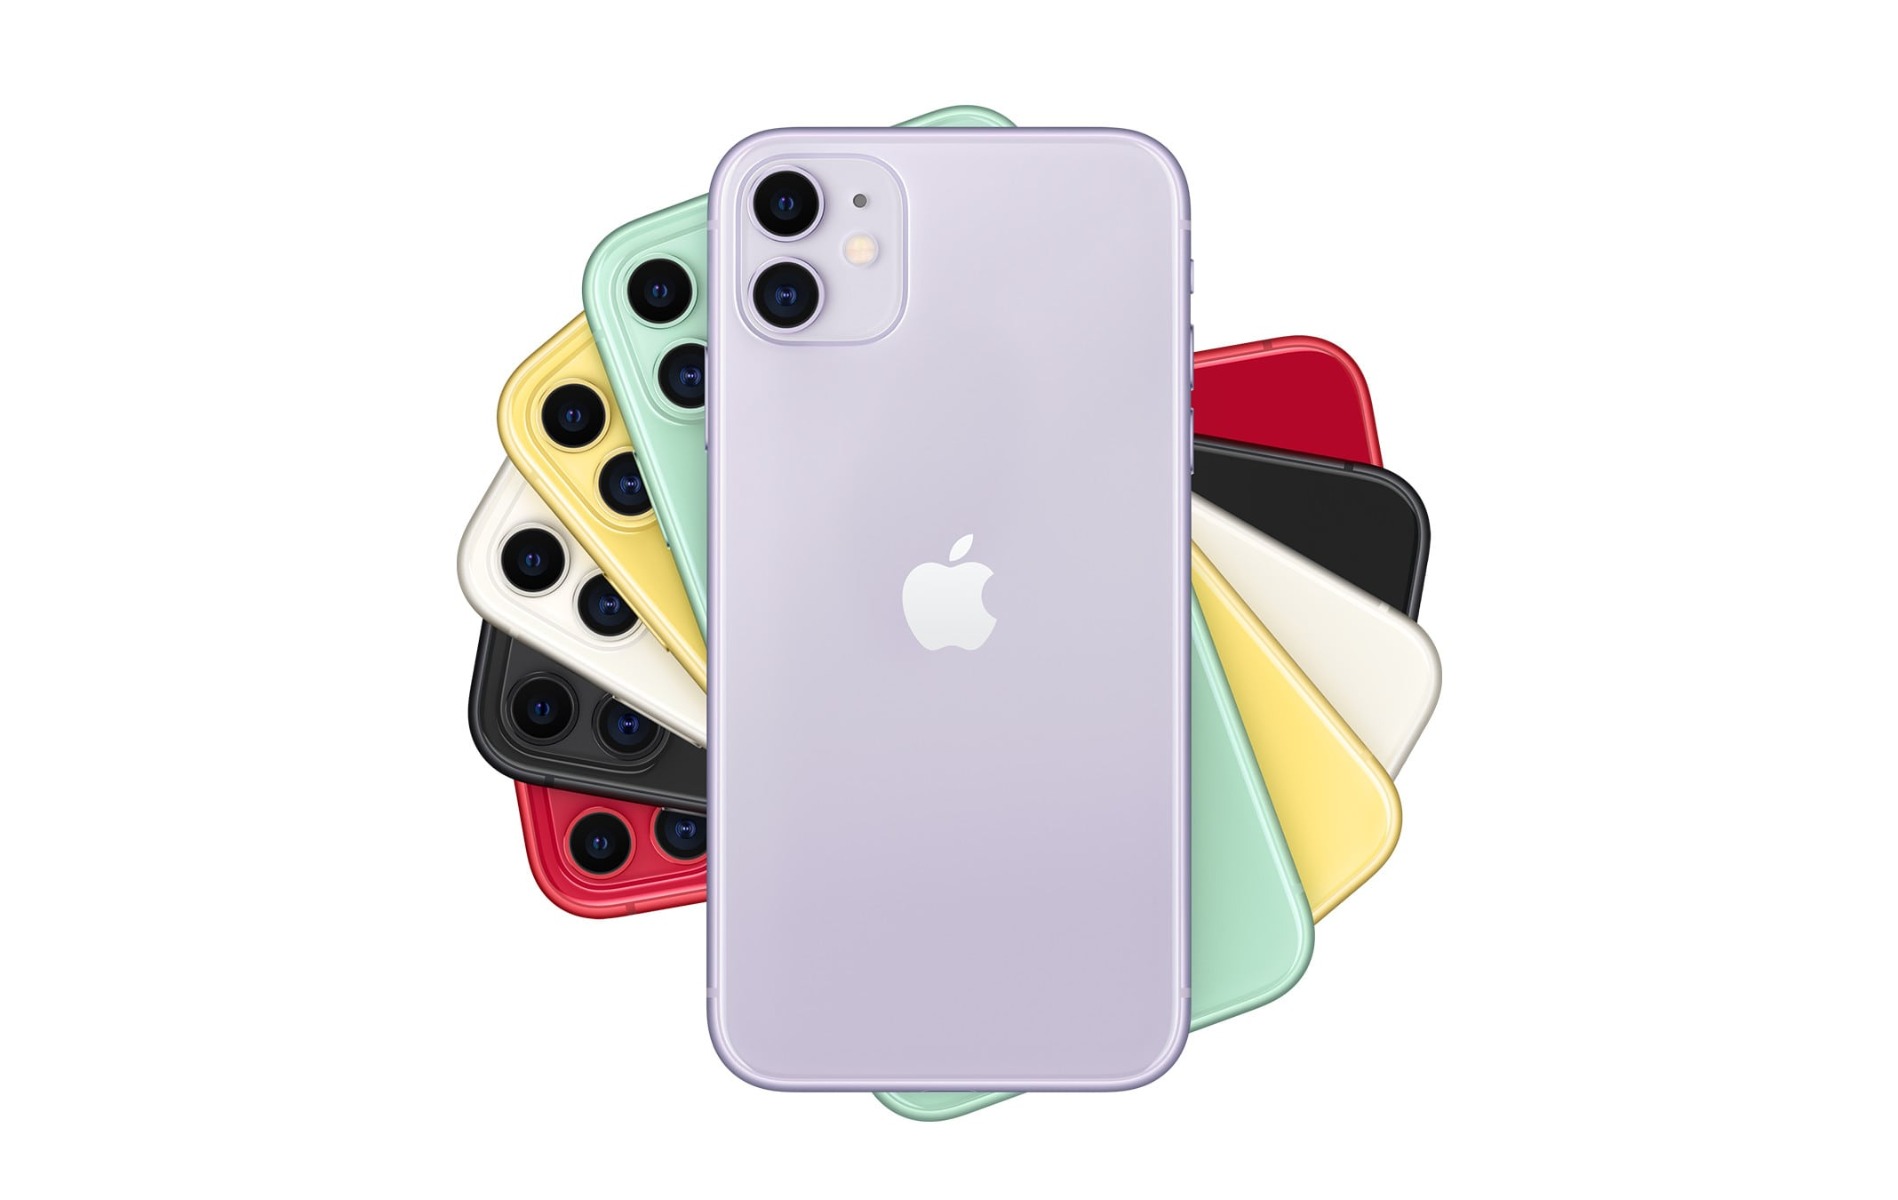 Masih Diburu, iPhone 11 Pro Series Turun Harga! Berikut Spesifikasi dan Rincian Harganya